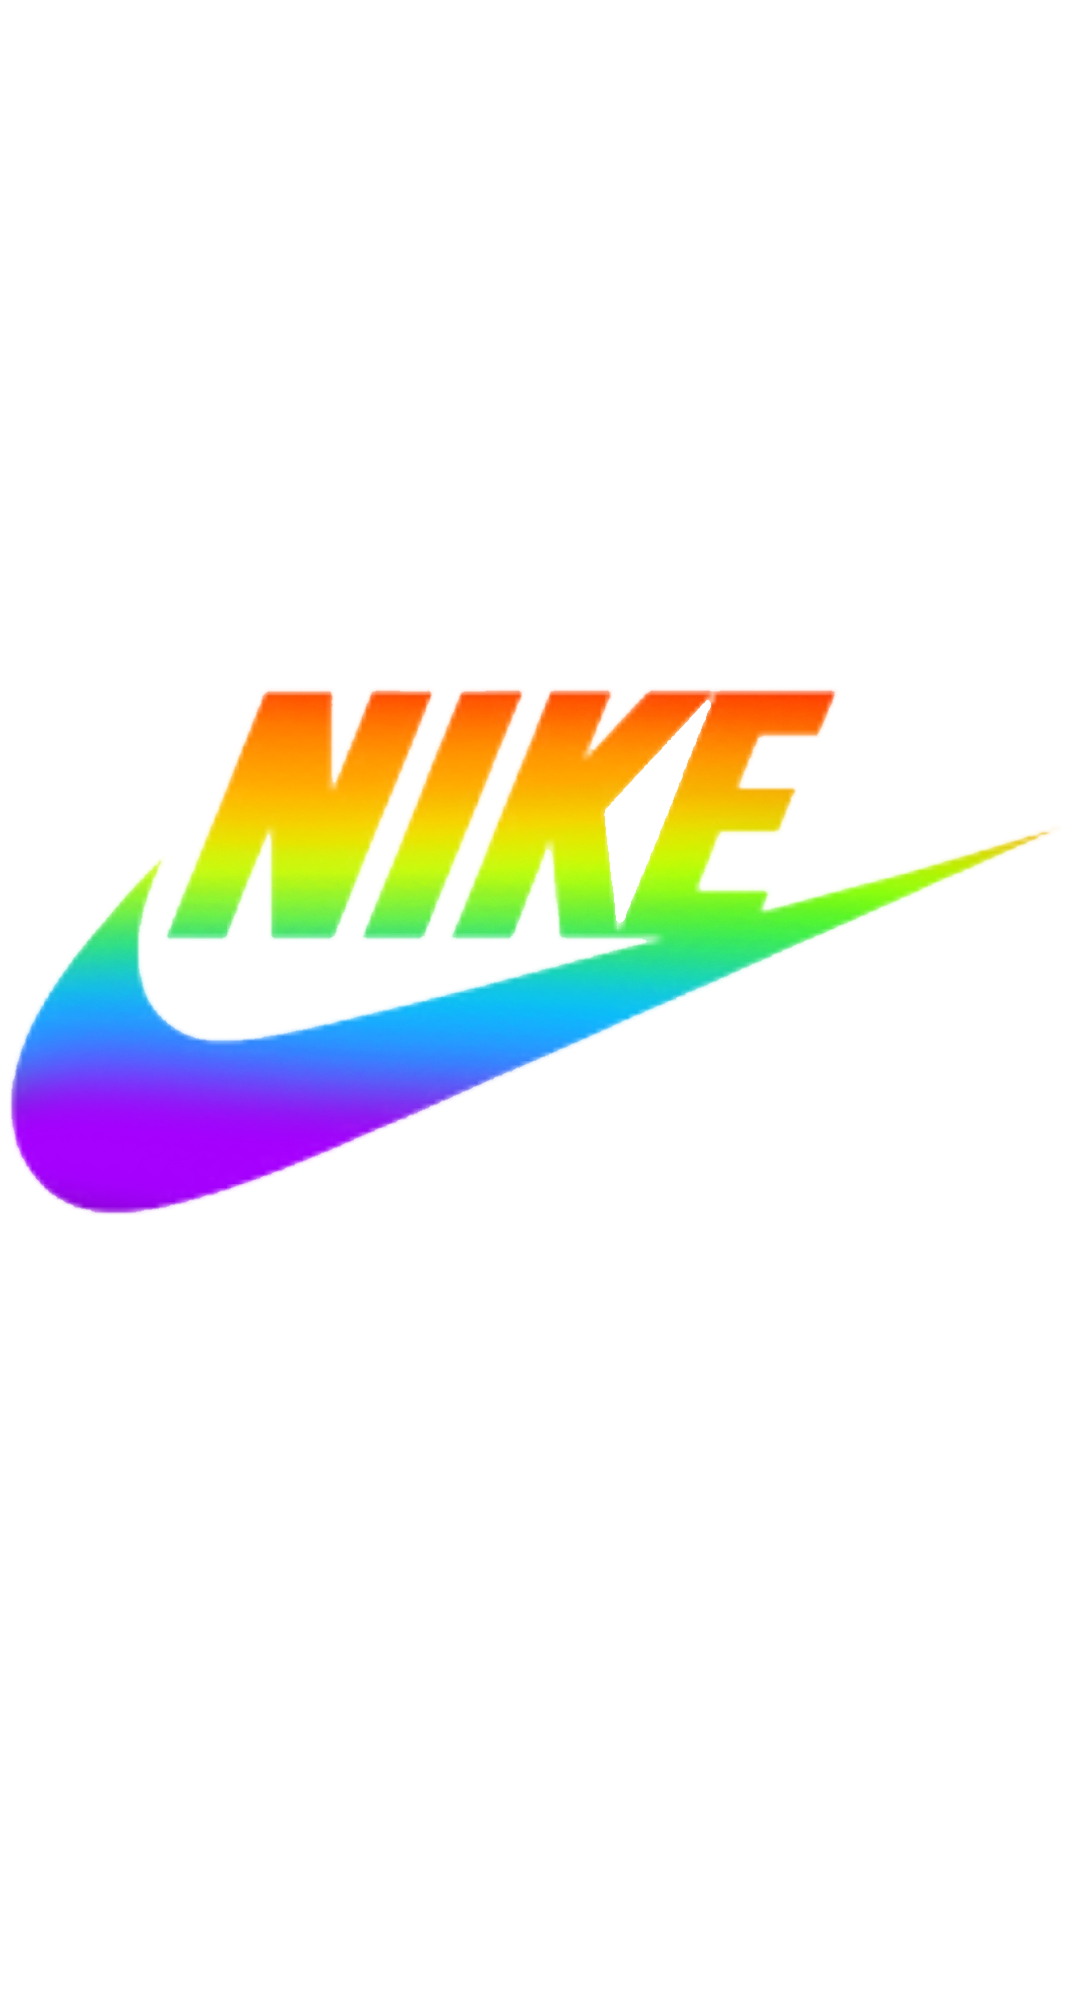 تصرخ شامل منهجية nike rainbow logo 